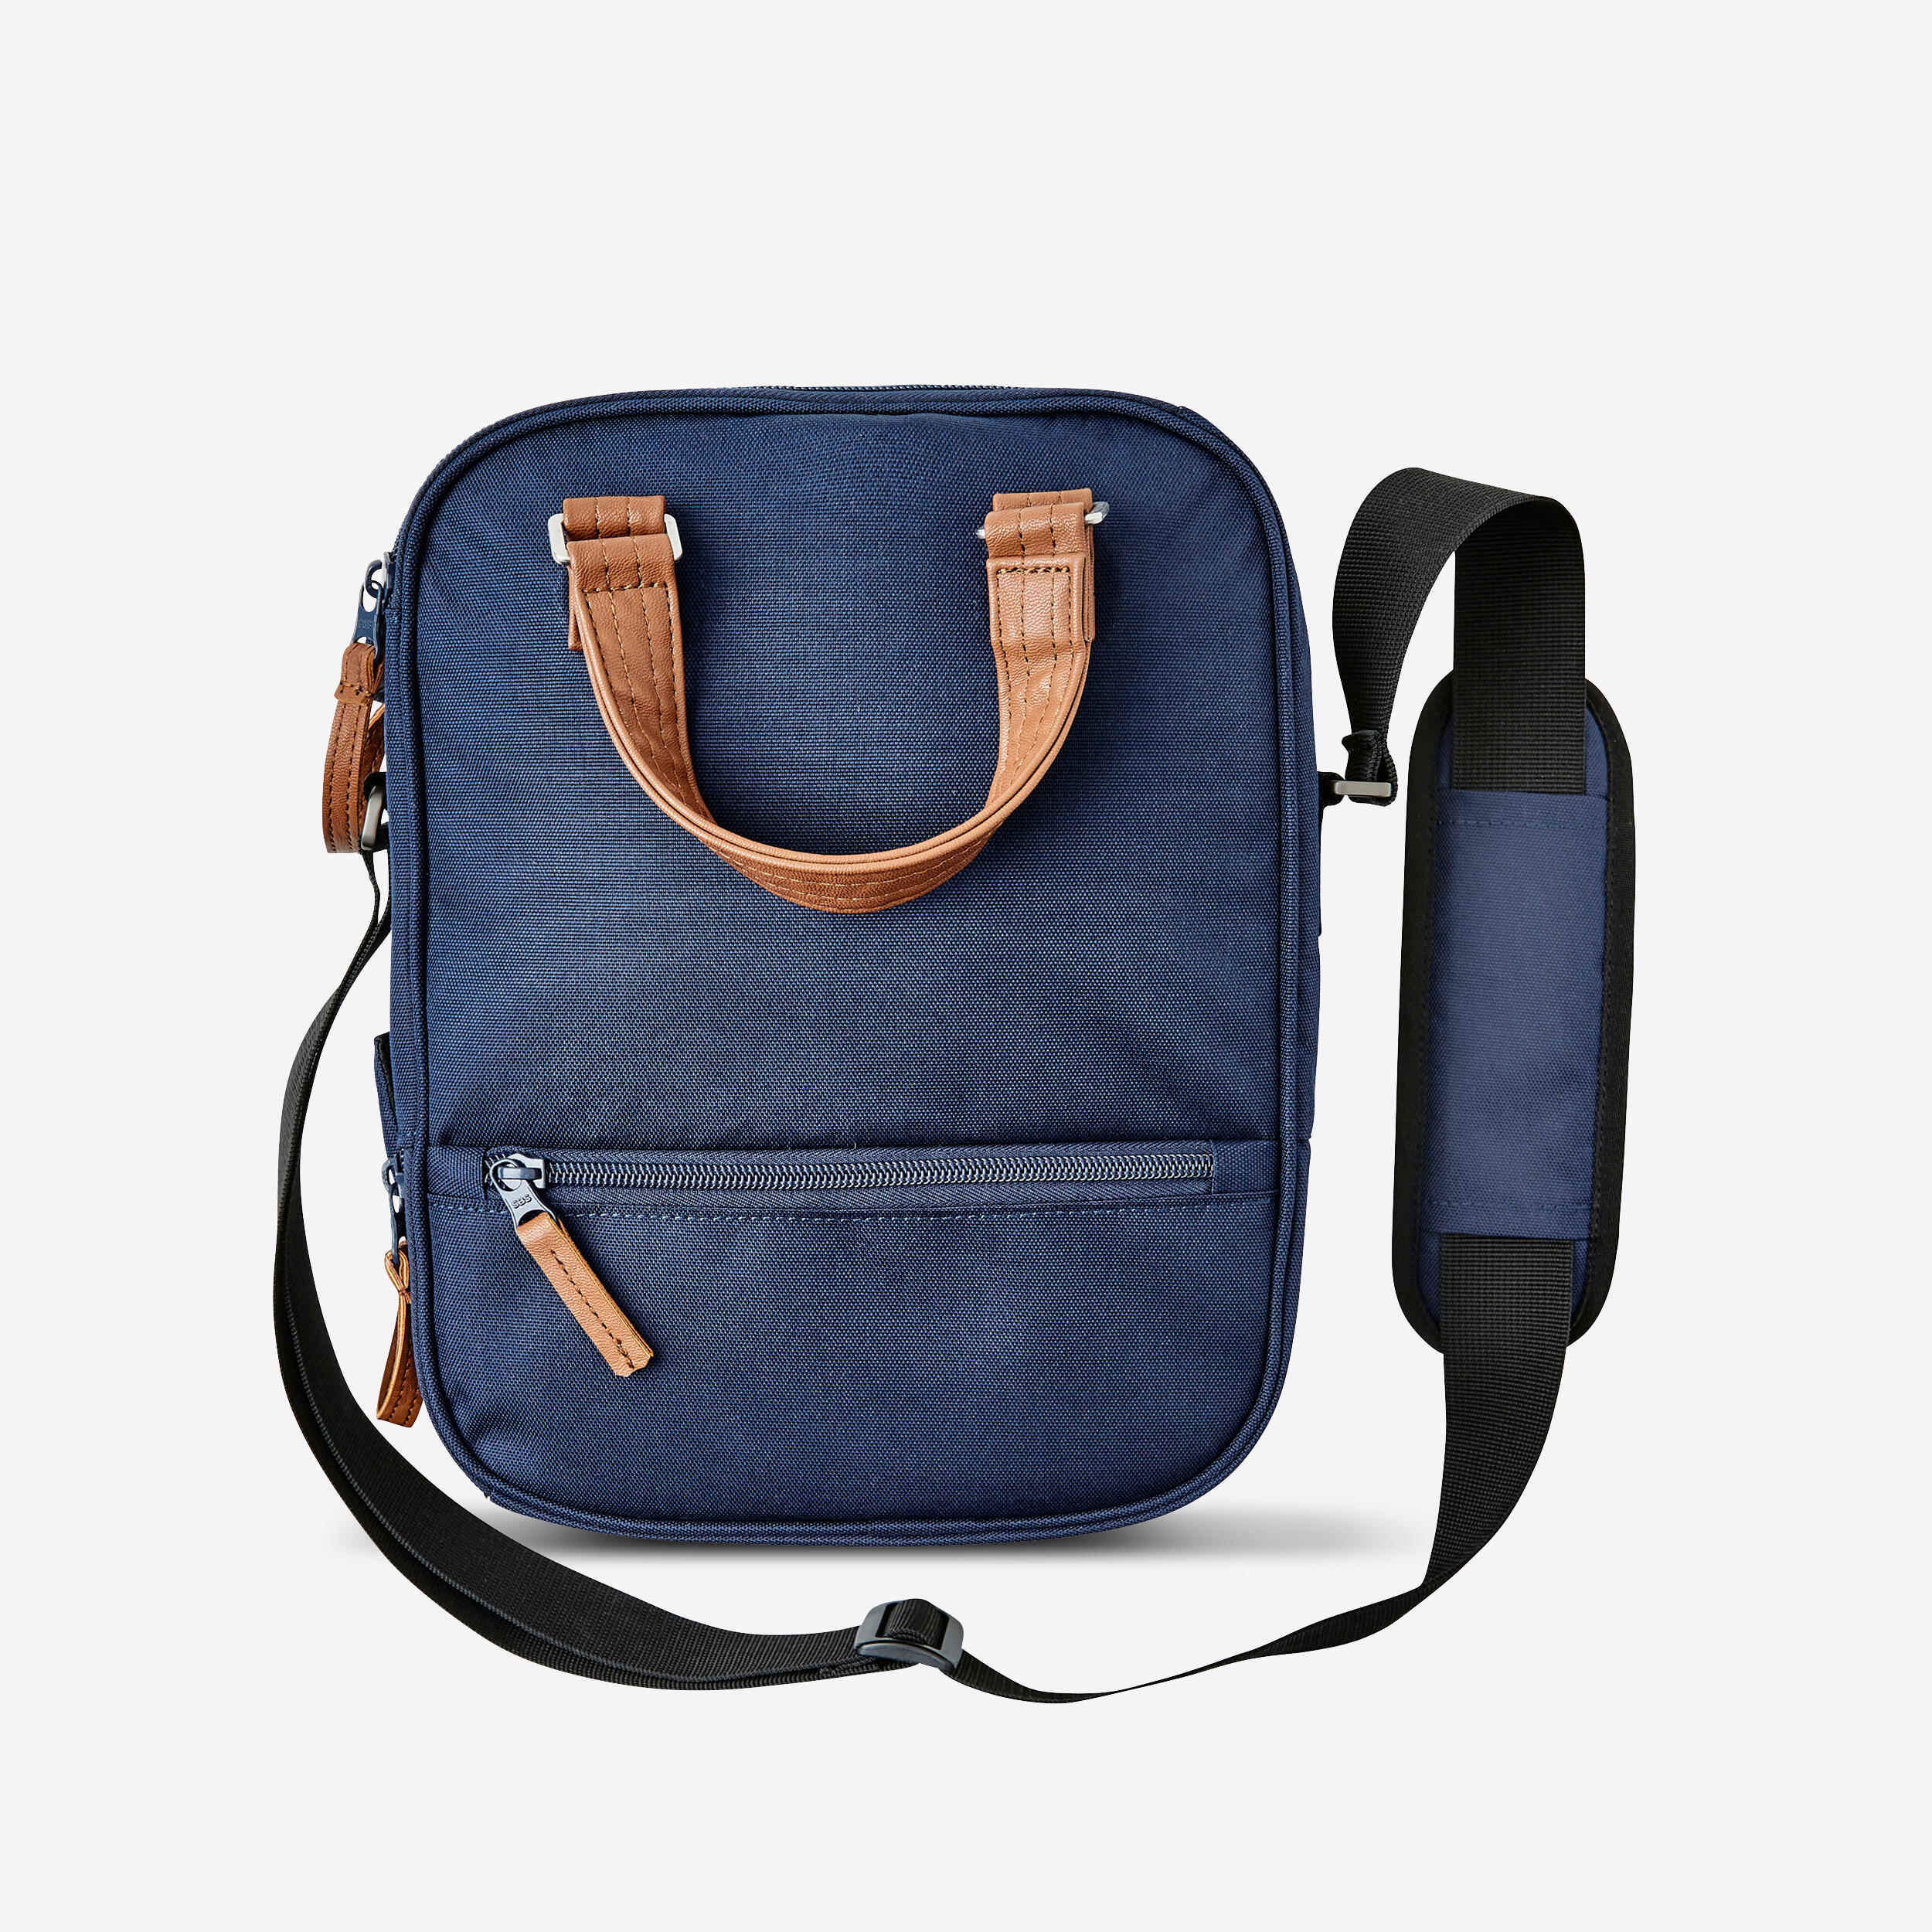 Semi-Rigid XL Bag for 3 Petanque Boules and Accessories - Blue 1/7